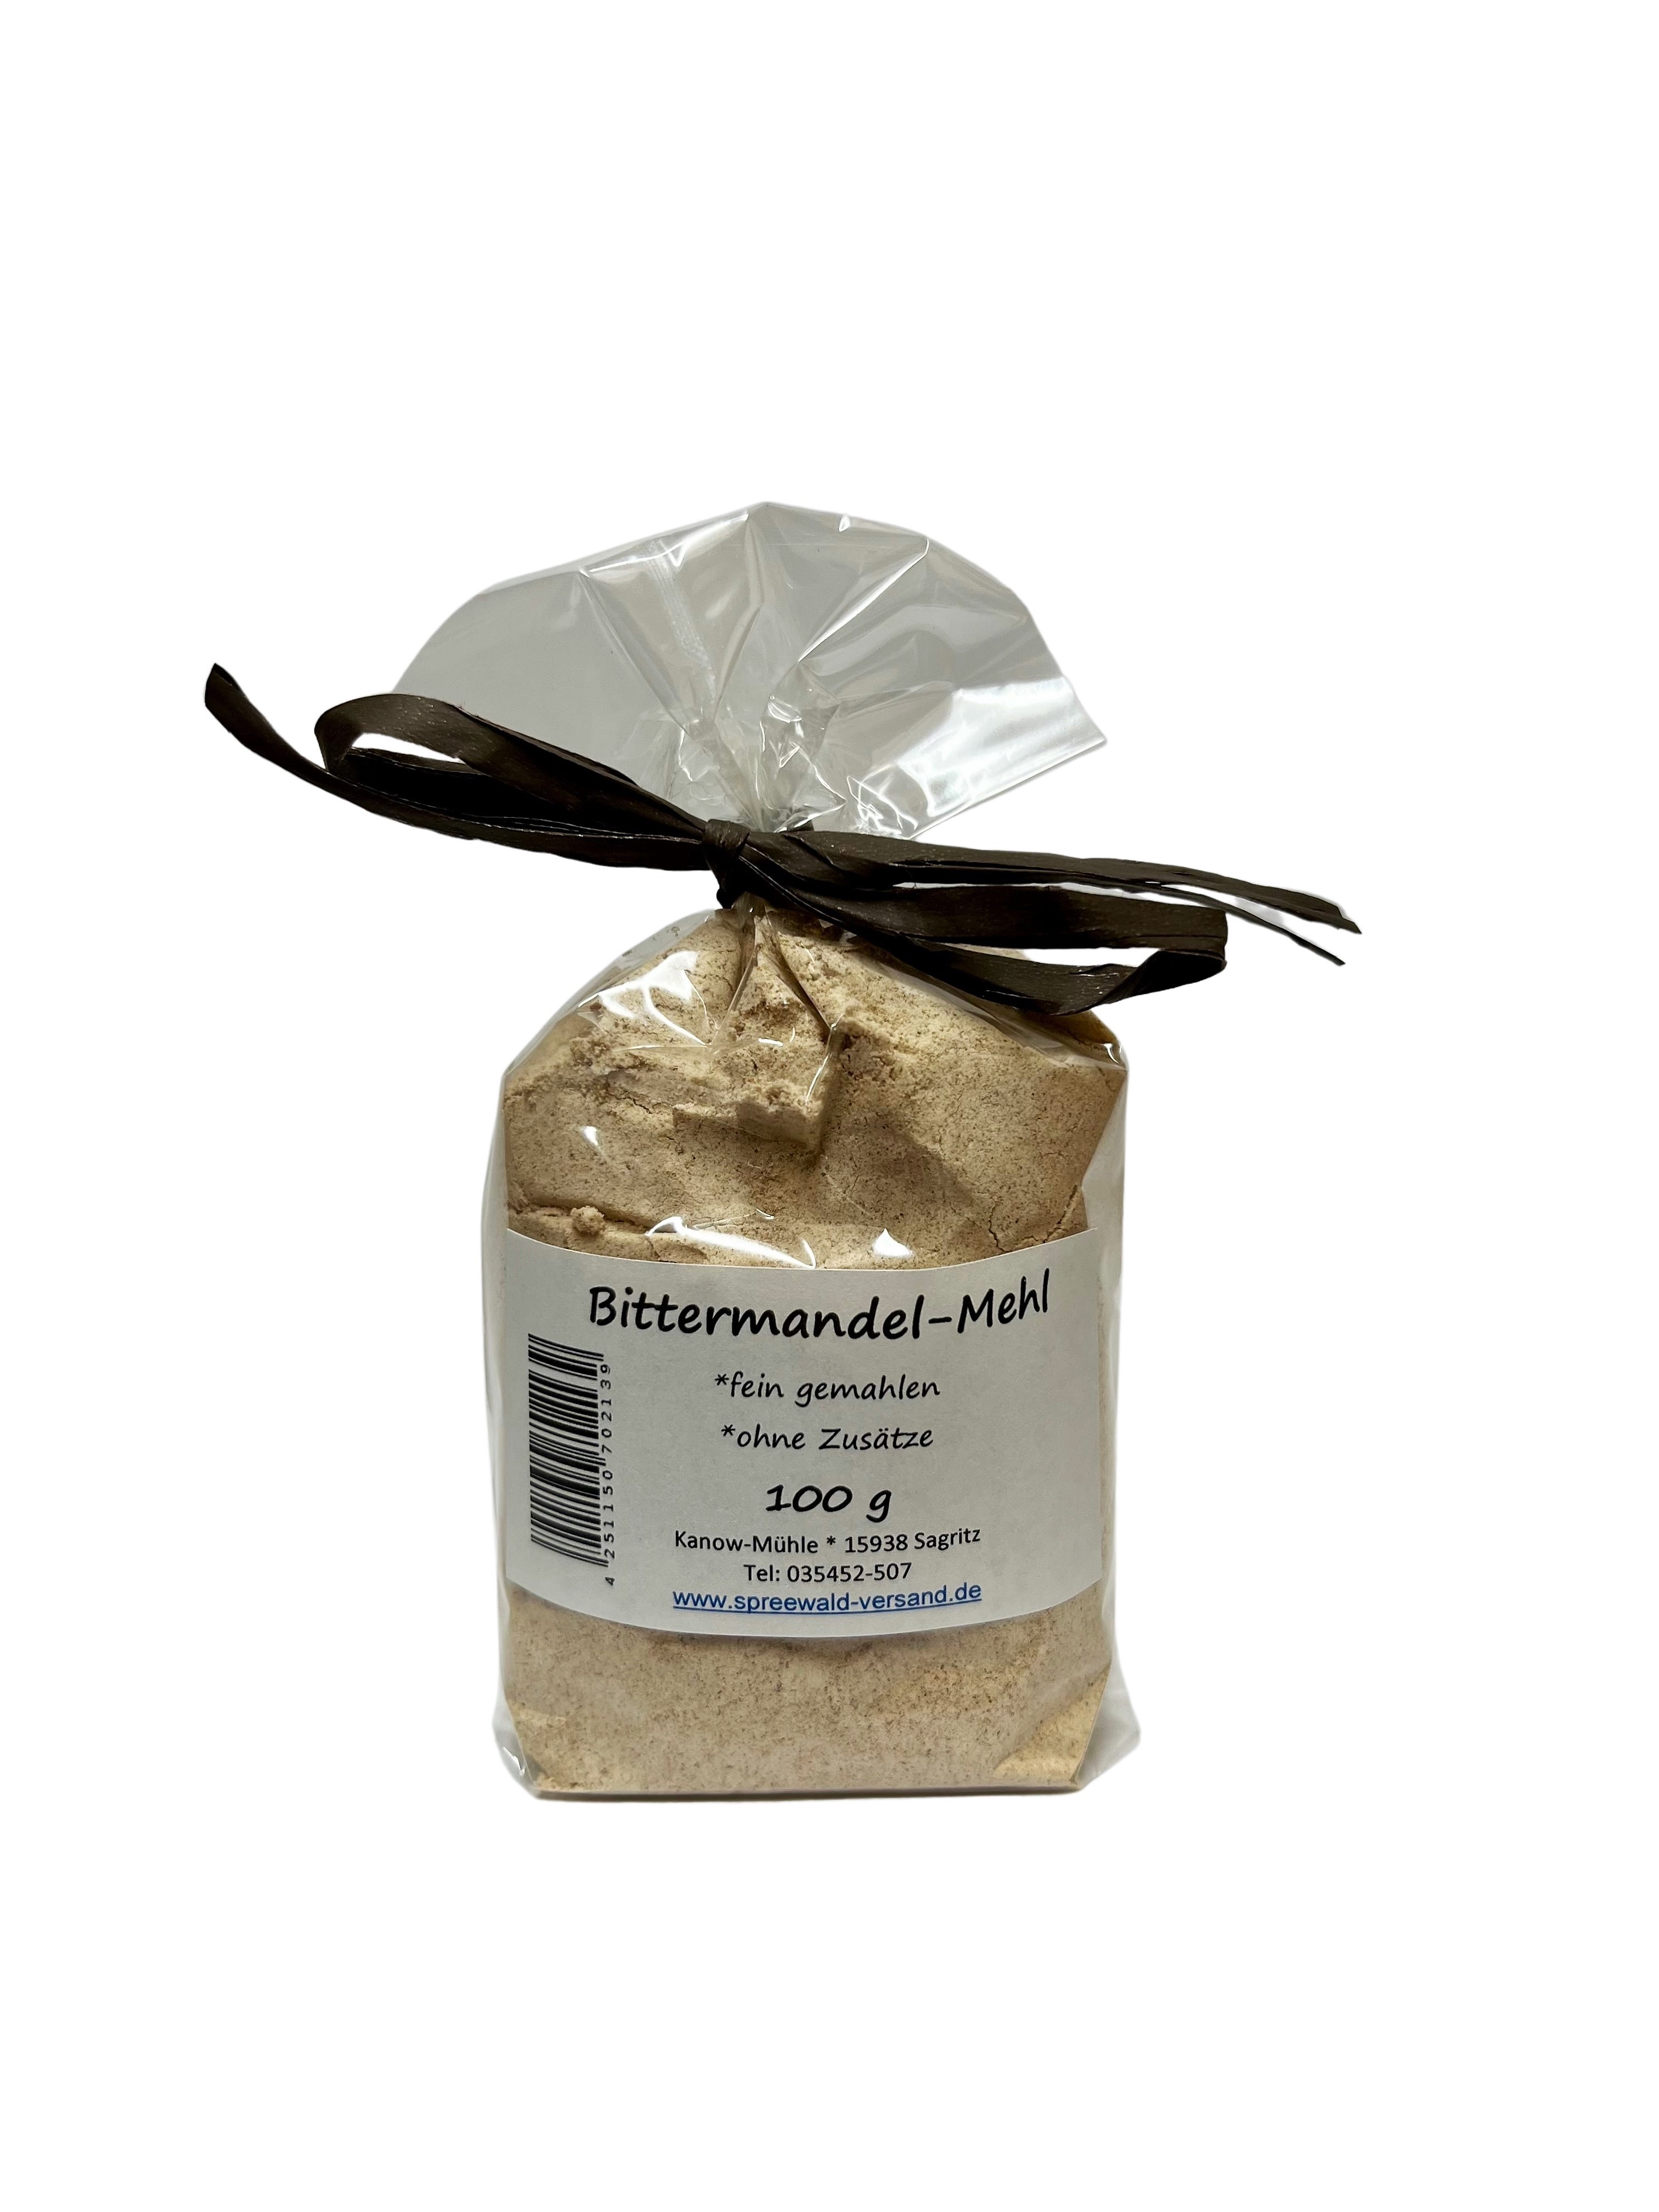 Bittermandel-Mehl